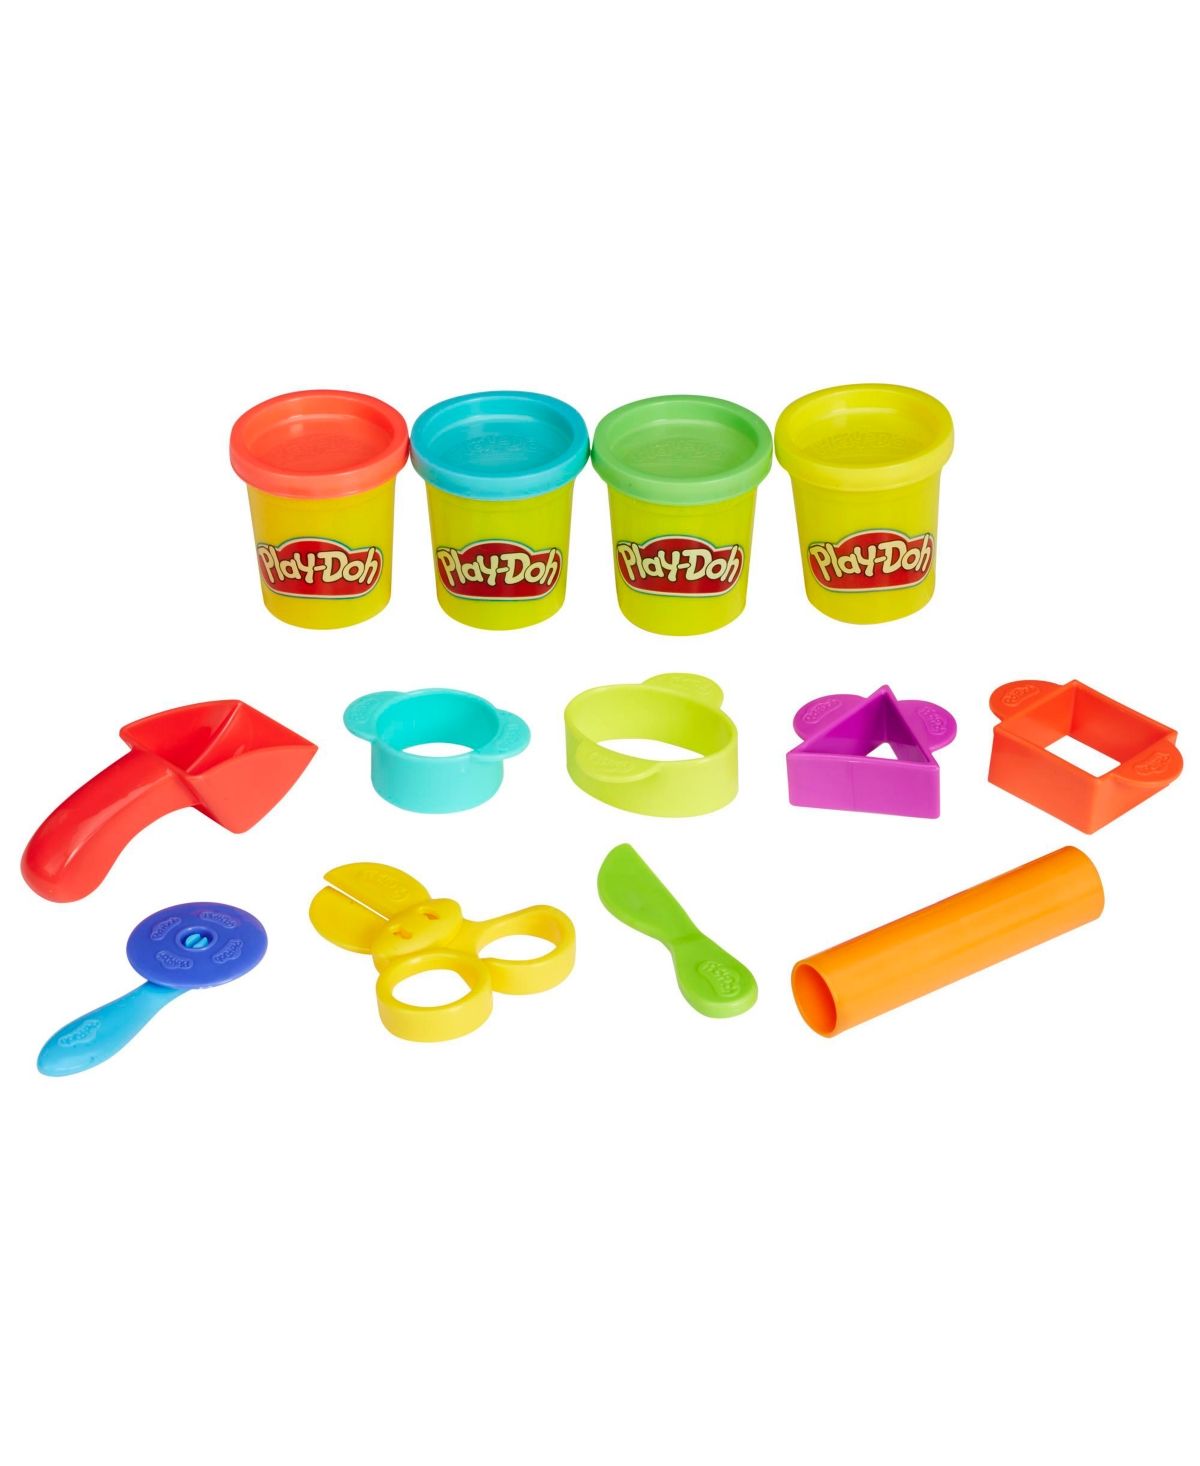 Play-Doh Starter Set | Macys (US)